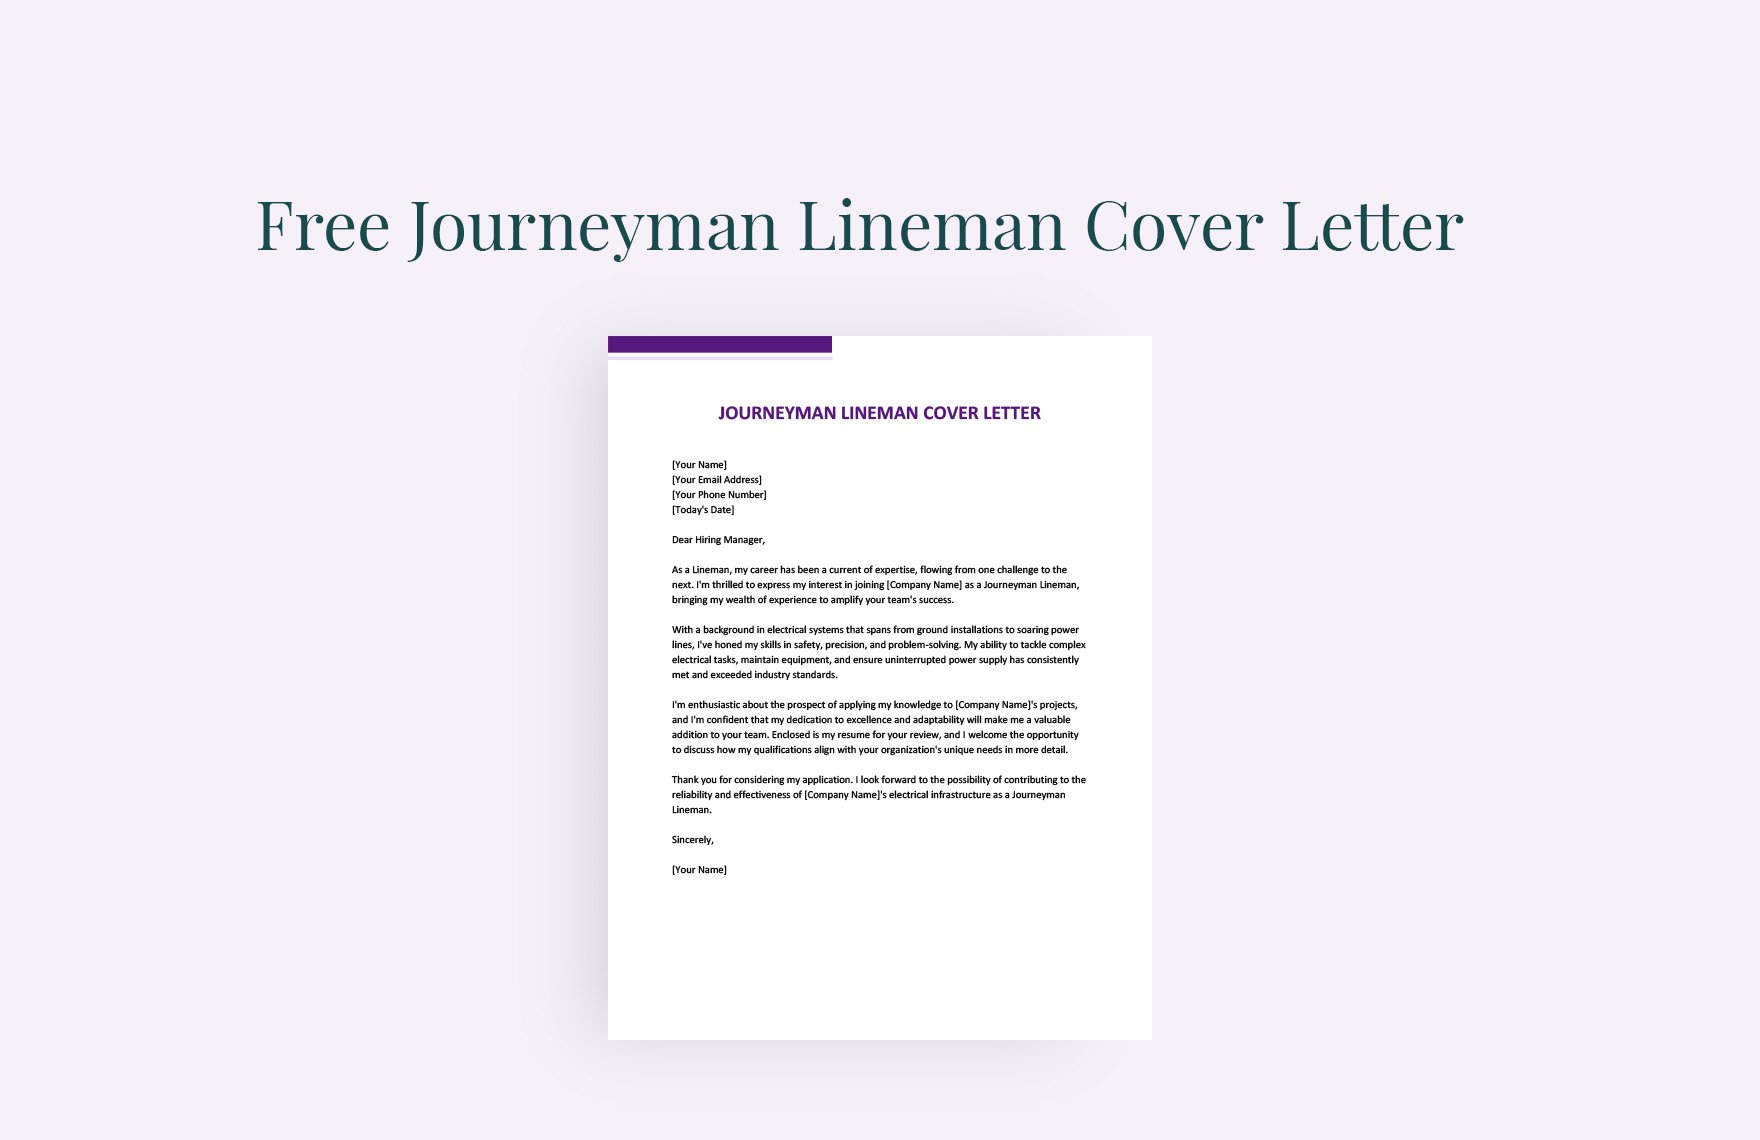 Journeyman Lineman Cover Letter in Word, Google Docs